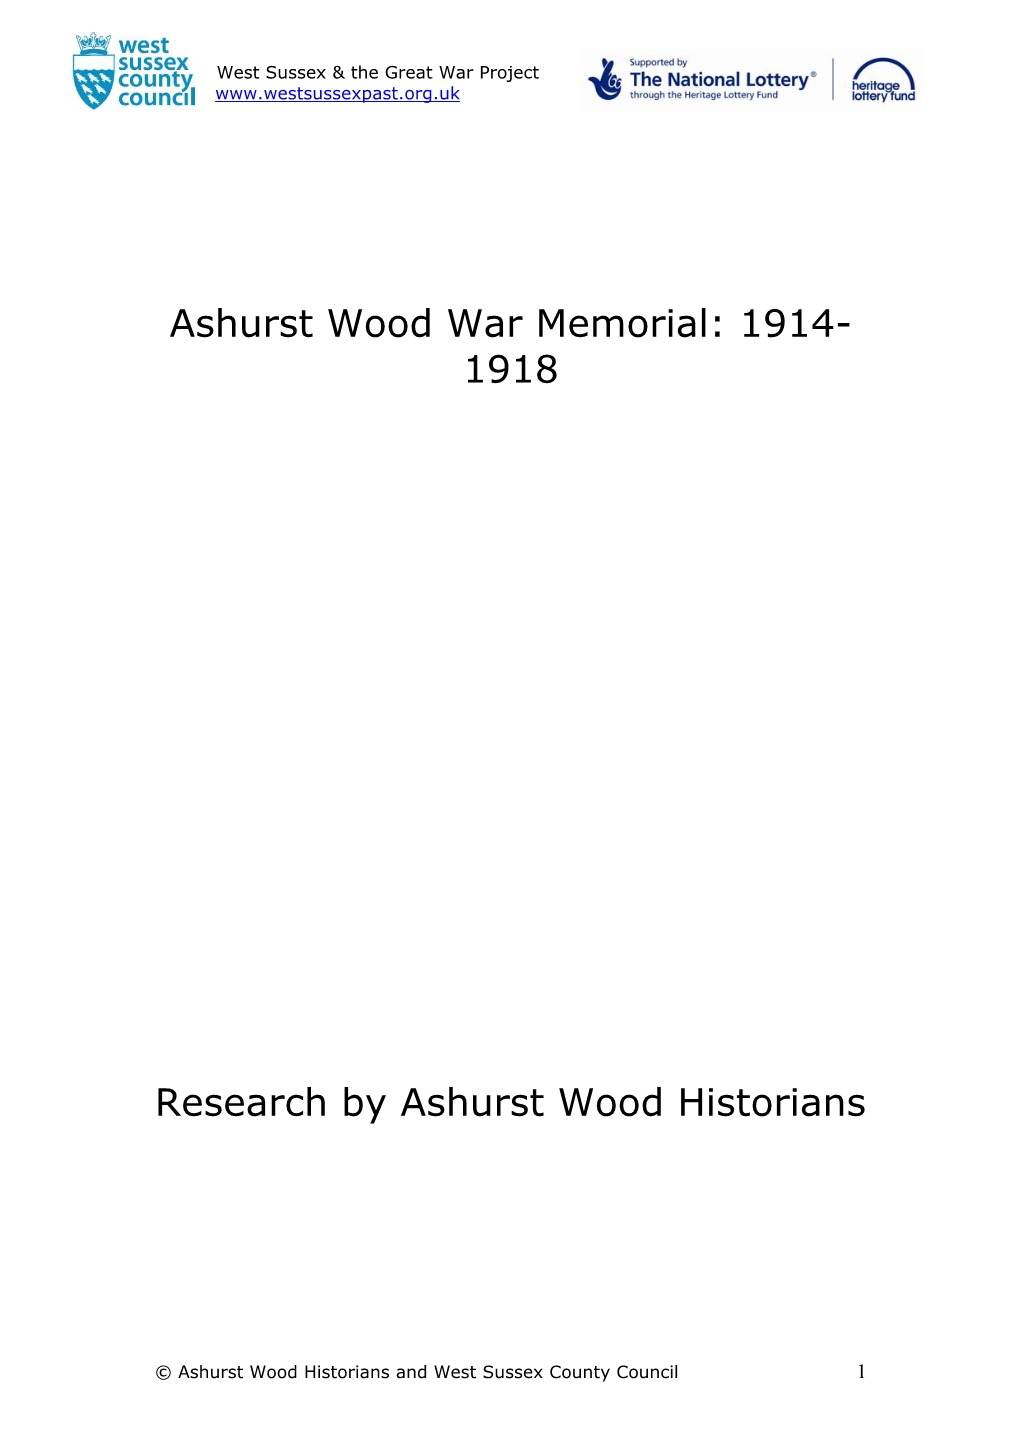 Ashurst Wood War Memorial 1914-1918